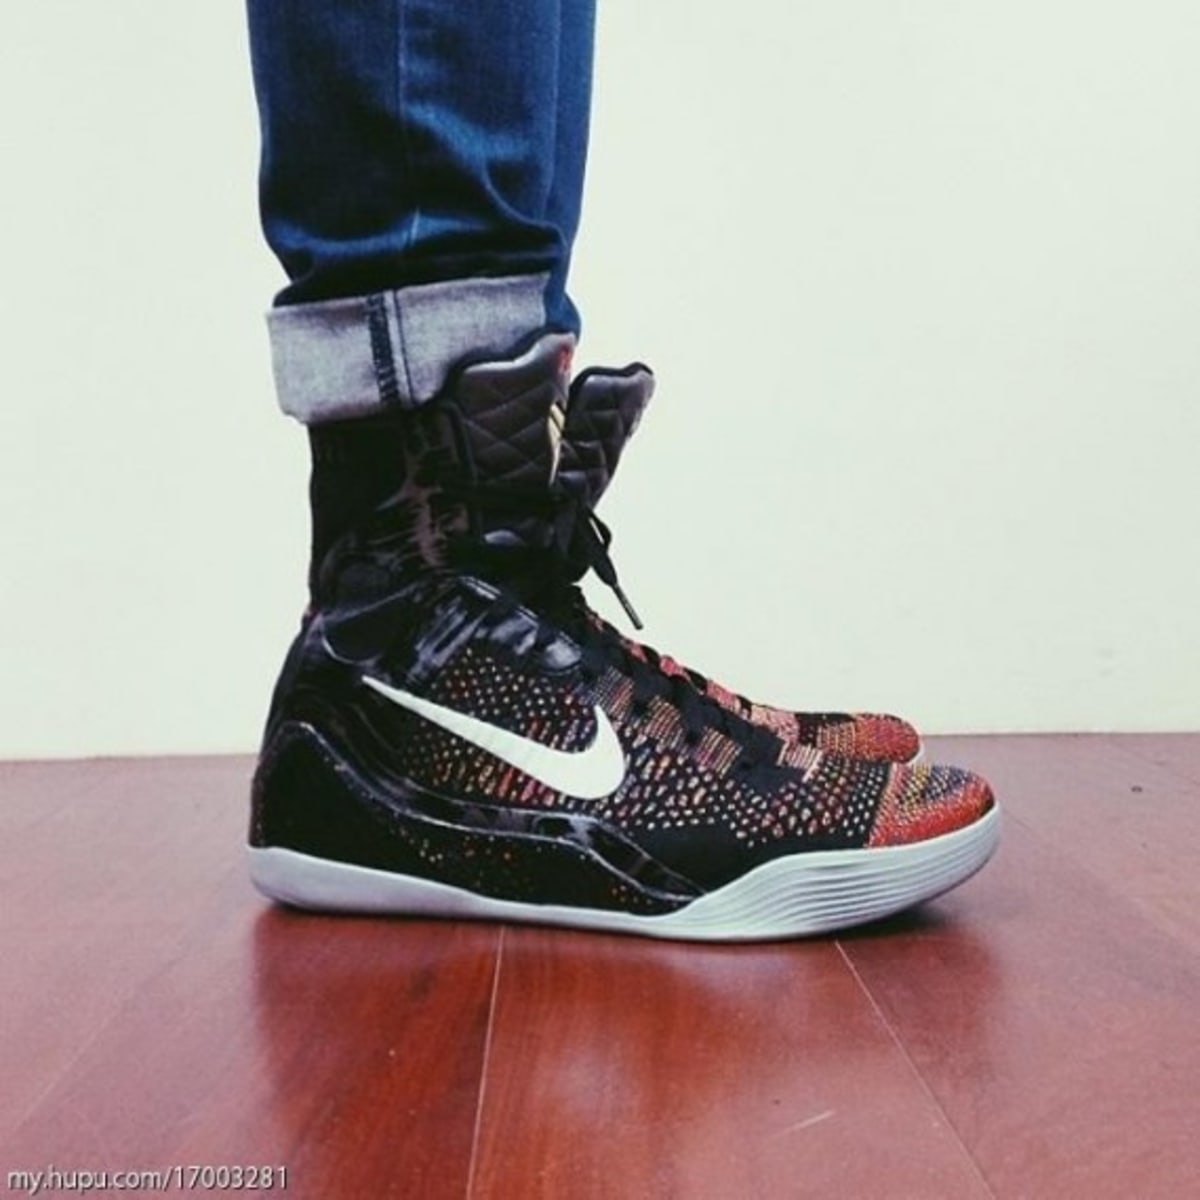 See What the Nike Kobe 9 Looks Like On-Foot | Complex